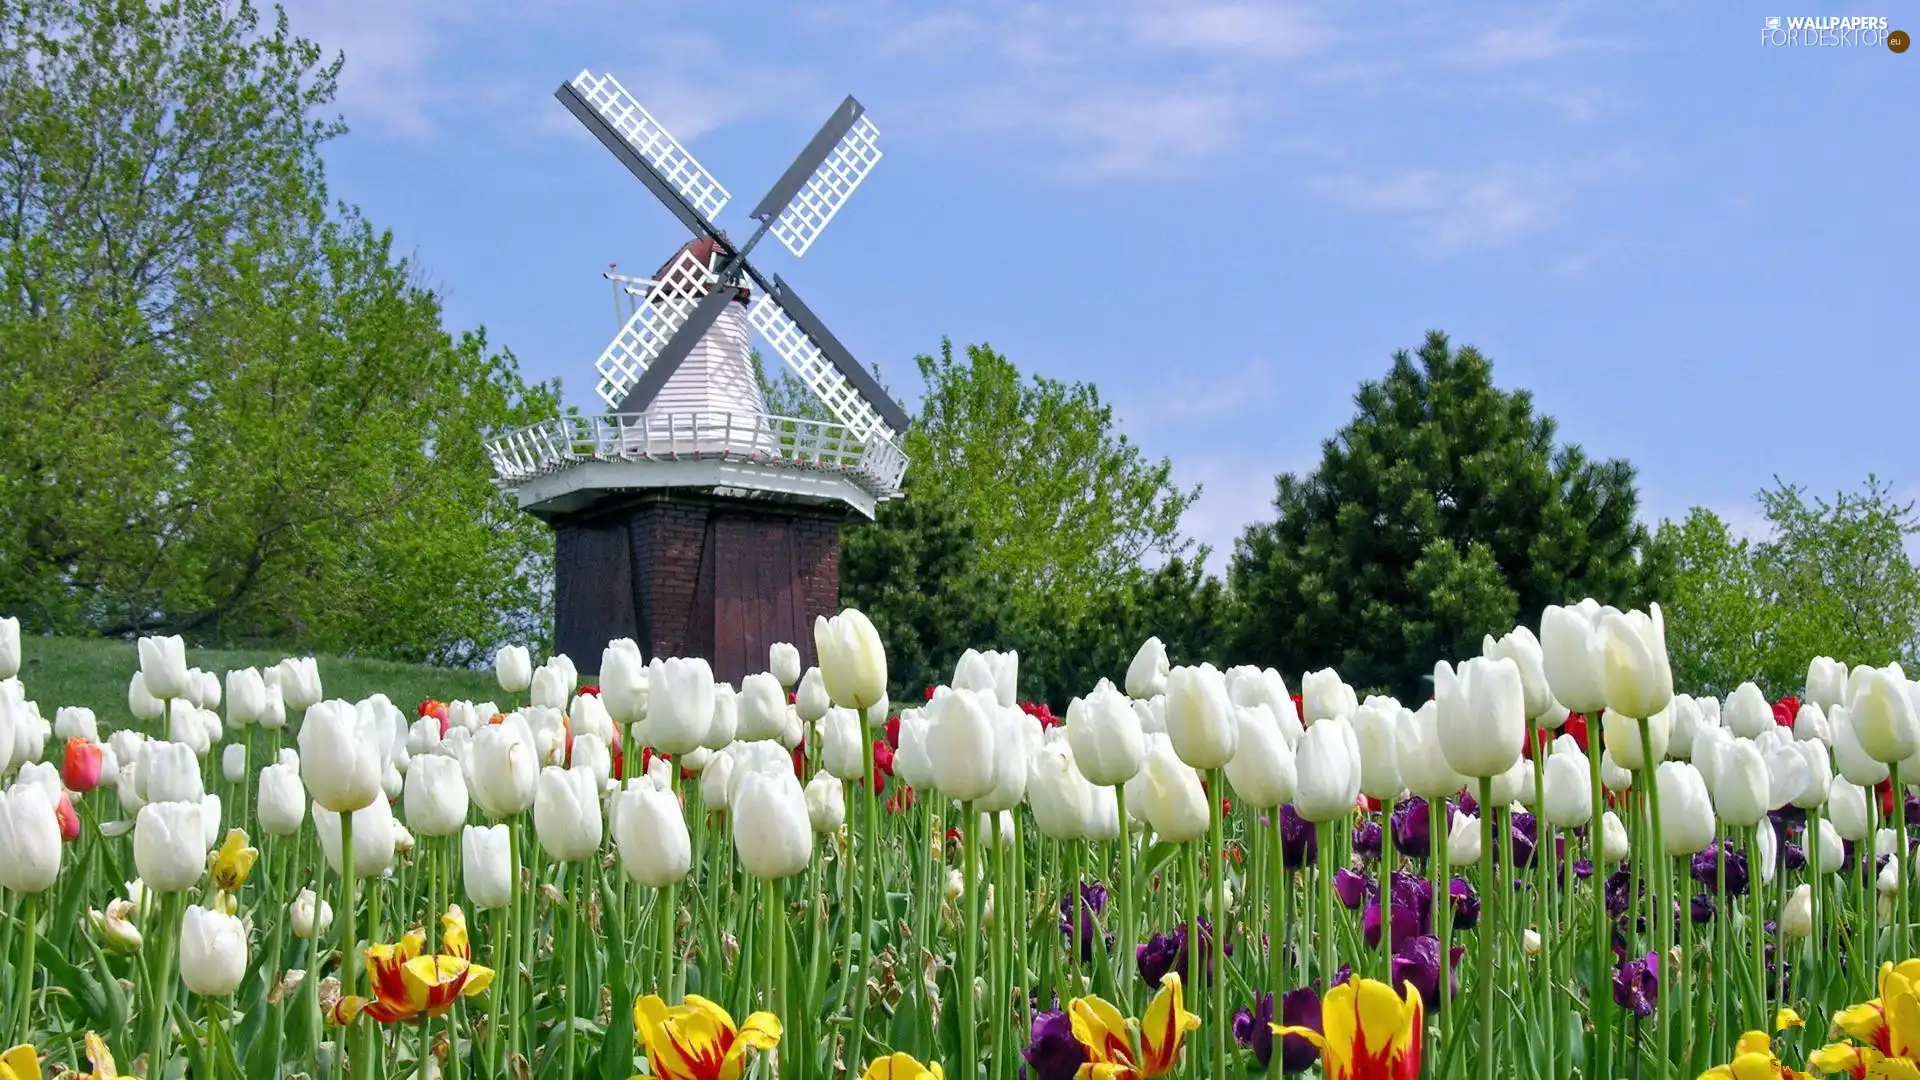 Windmill, Dutch, Tulips